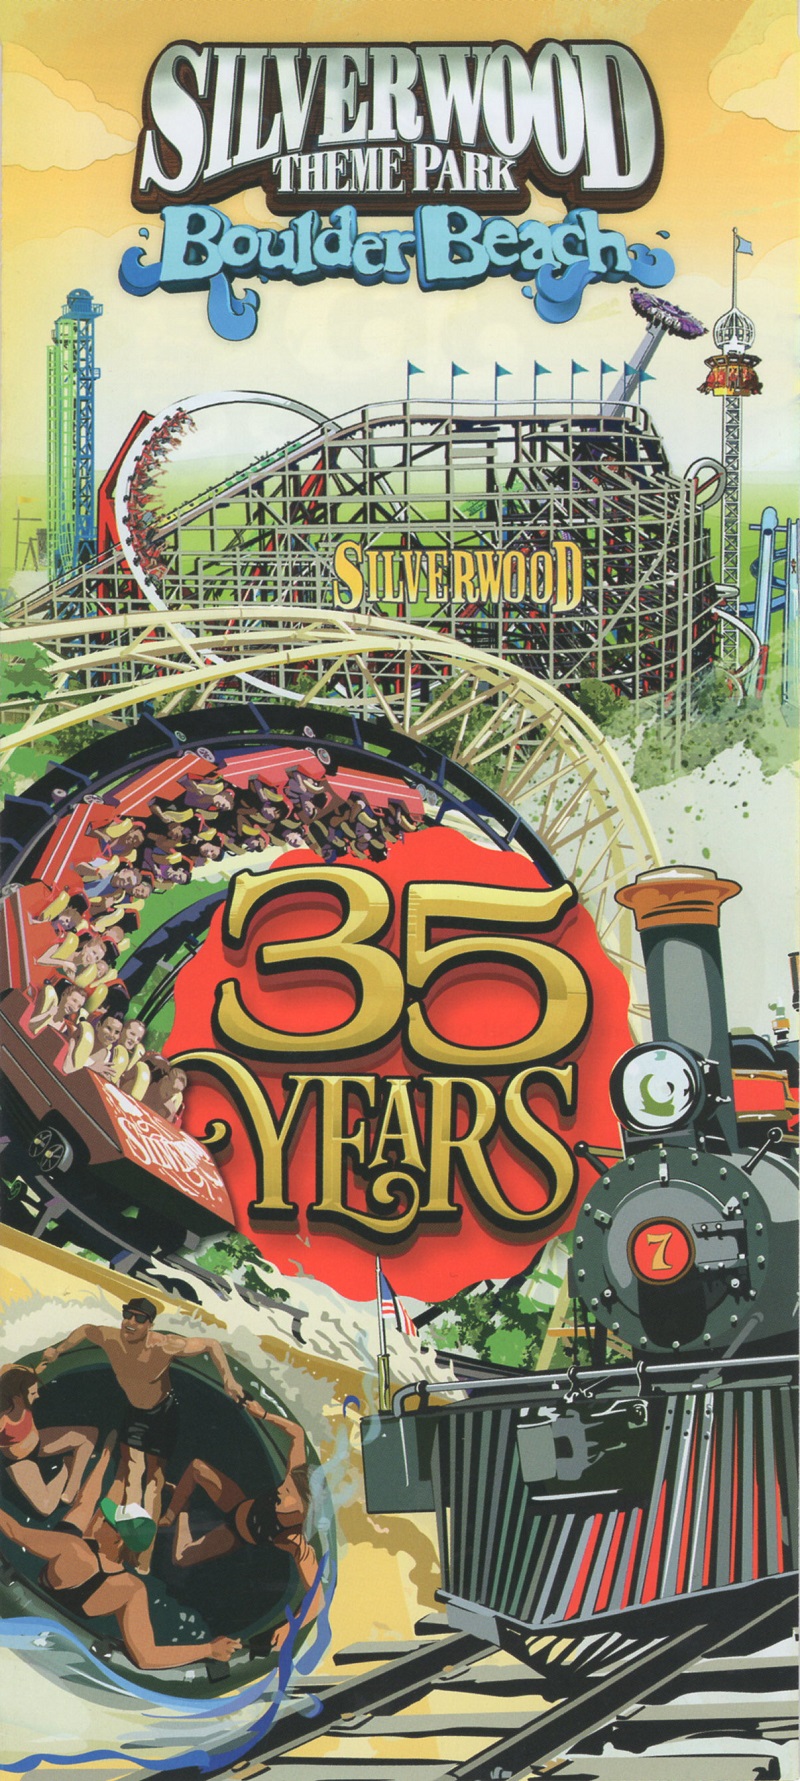 Silverwood Theme Park brochure full size